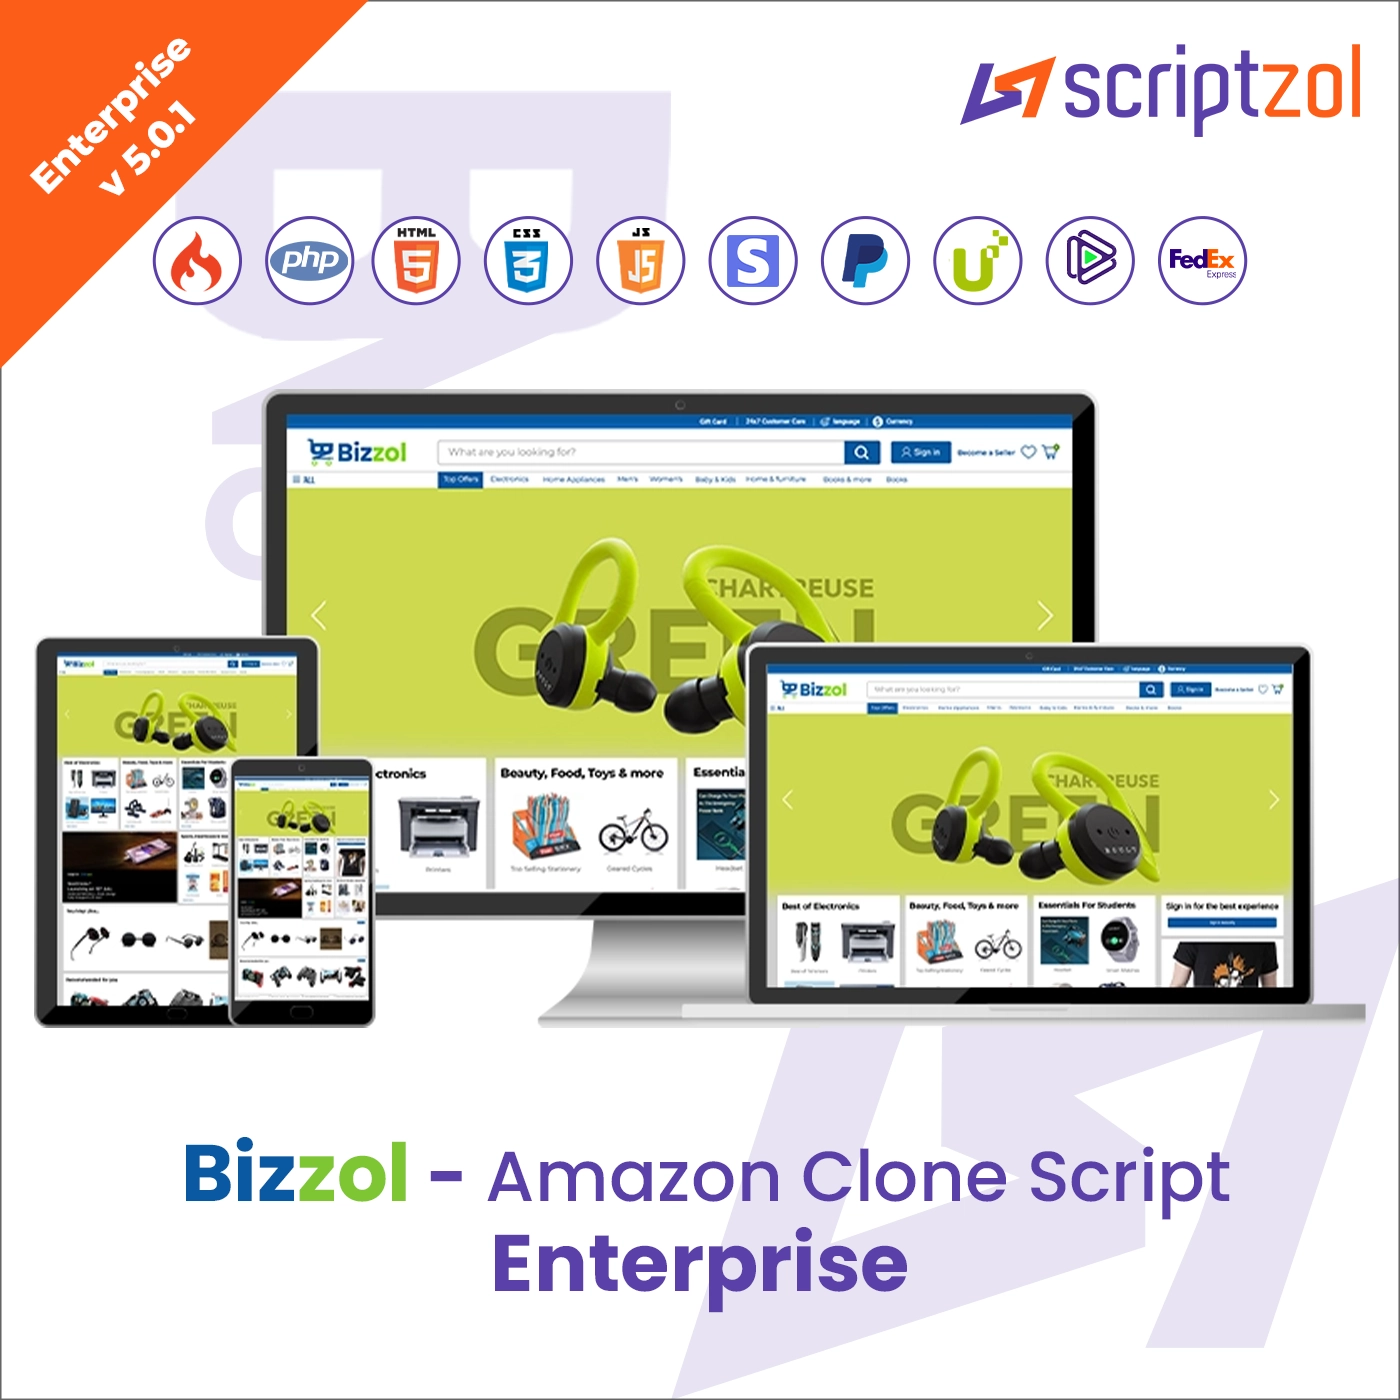 Bizzol - Amazon Clone Script Enterprise